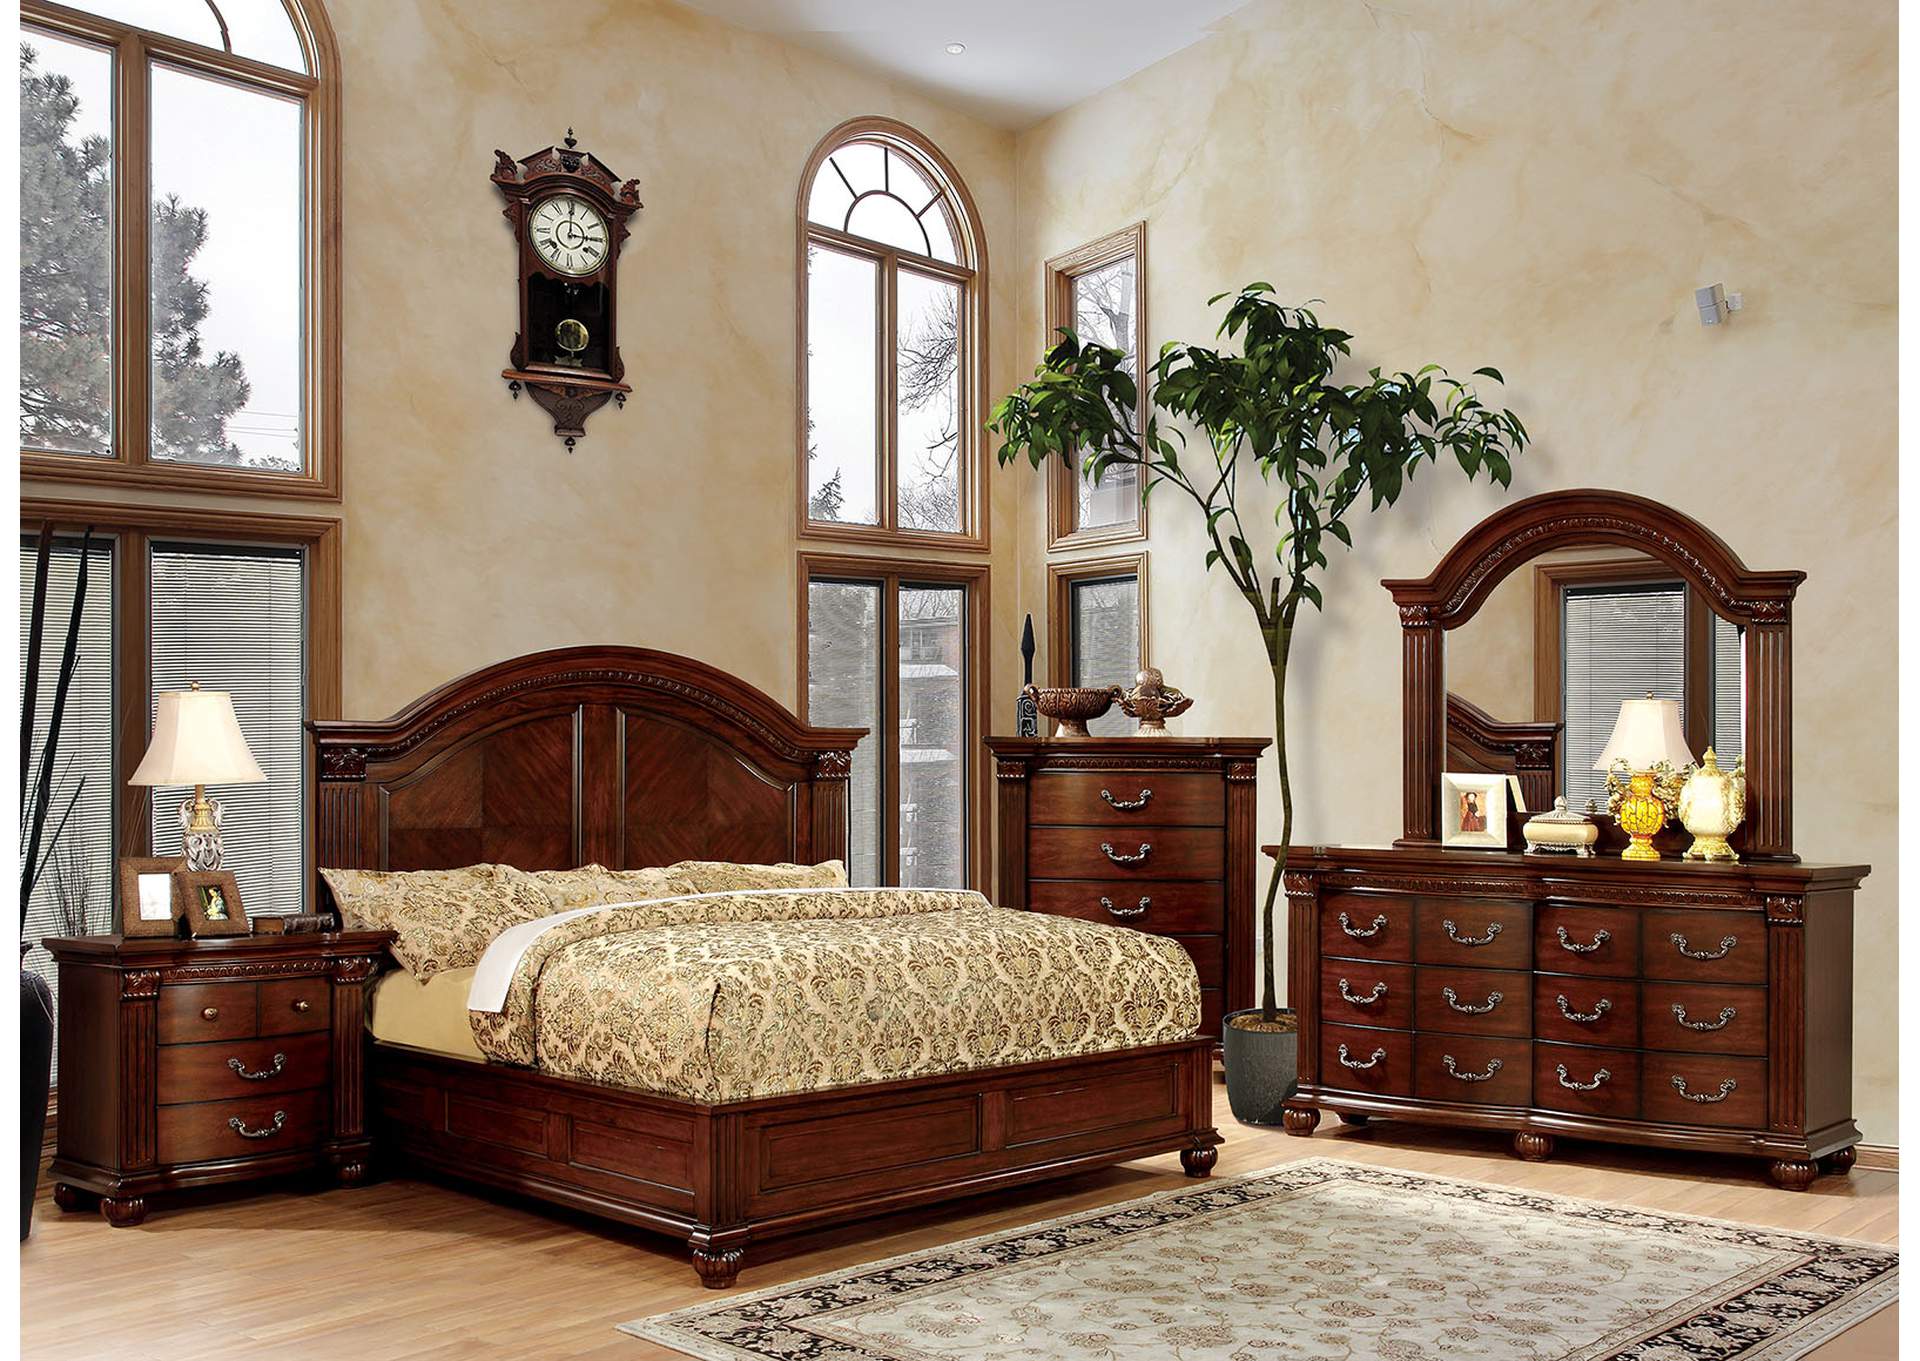 Grandom Cherry Queen Platform Bed w/Dresser and Mirror,Furniture of America